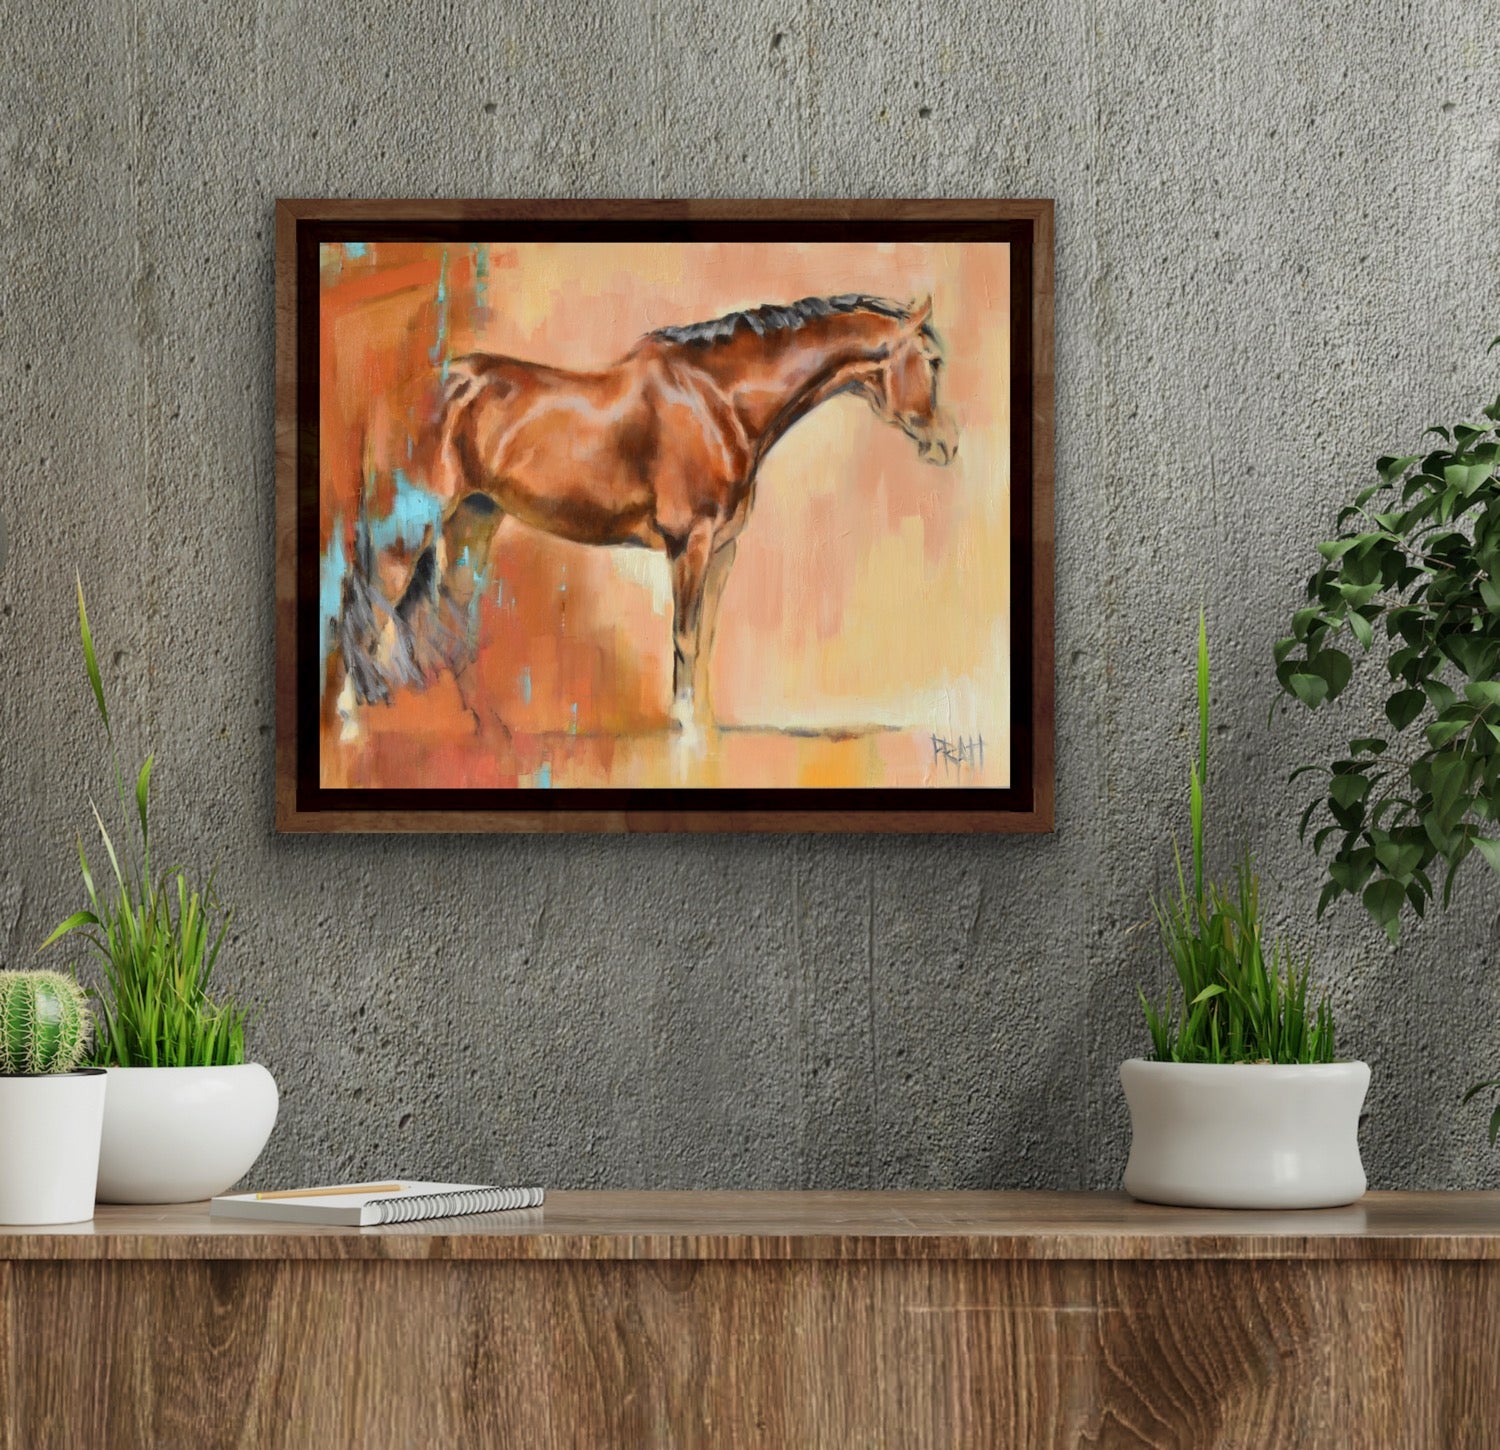 Yin and Yang - Original Art - Jennifer Pratt Artist - Shop equestrian art, horse paintings and horse portraits